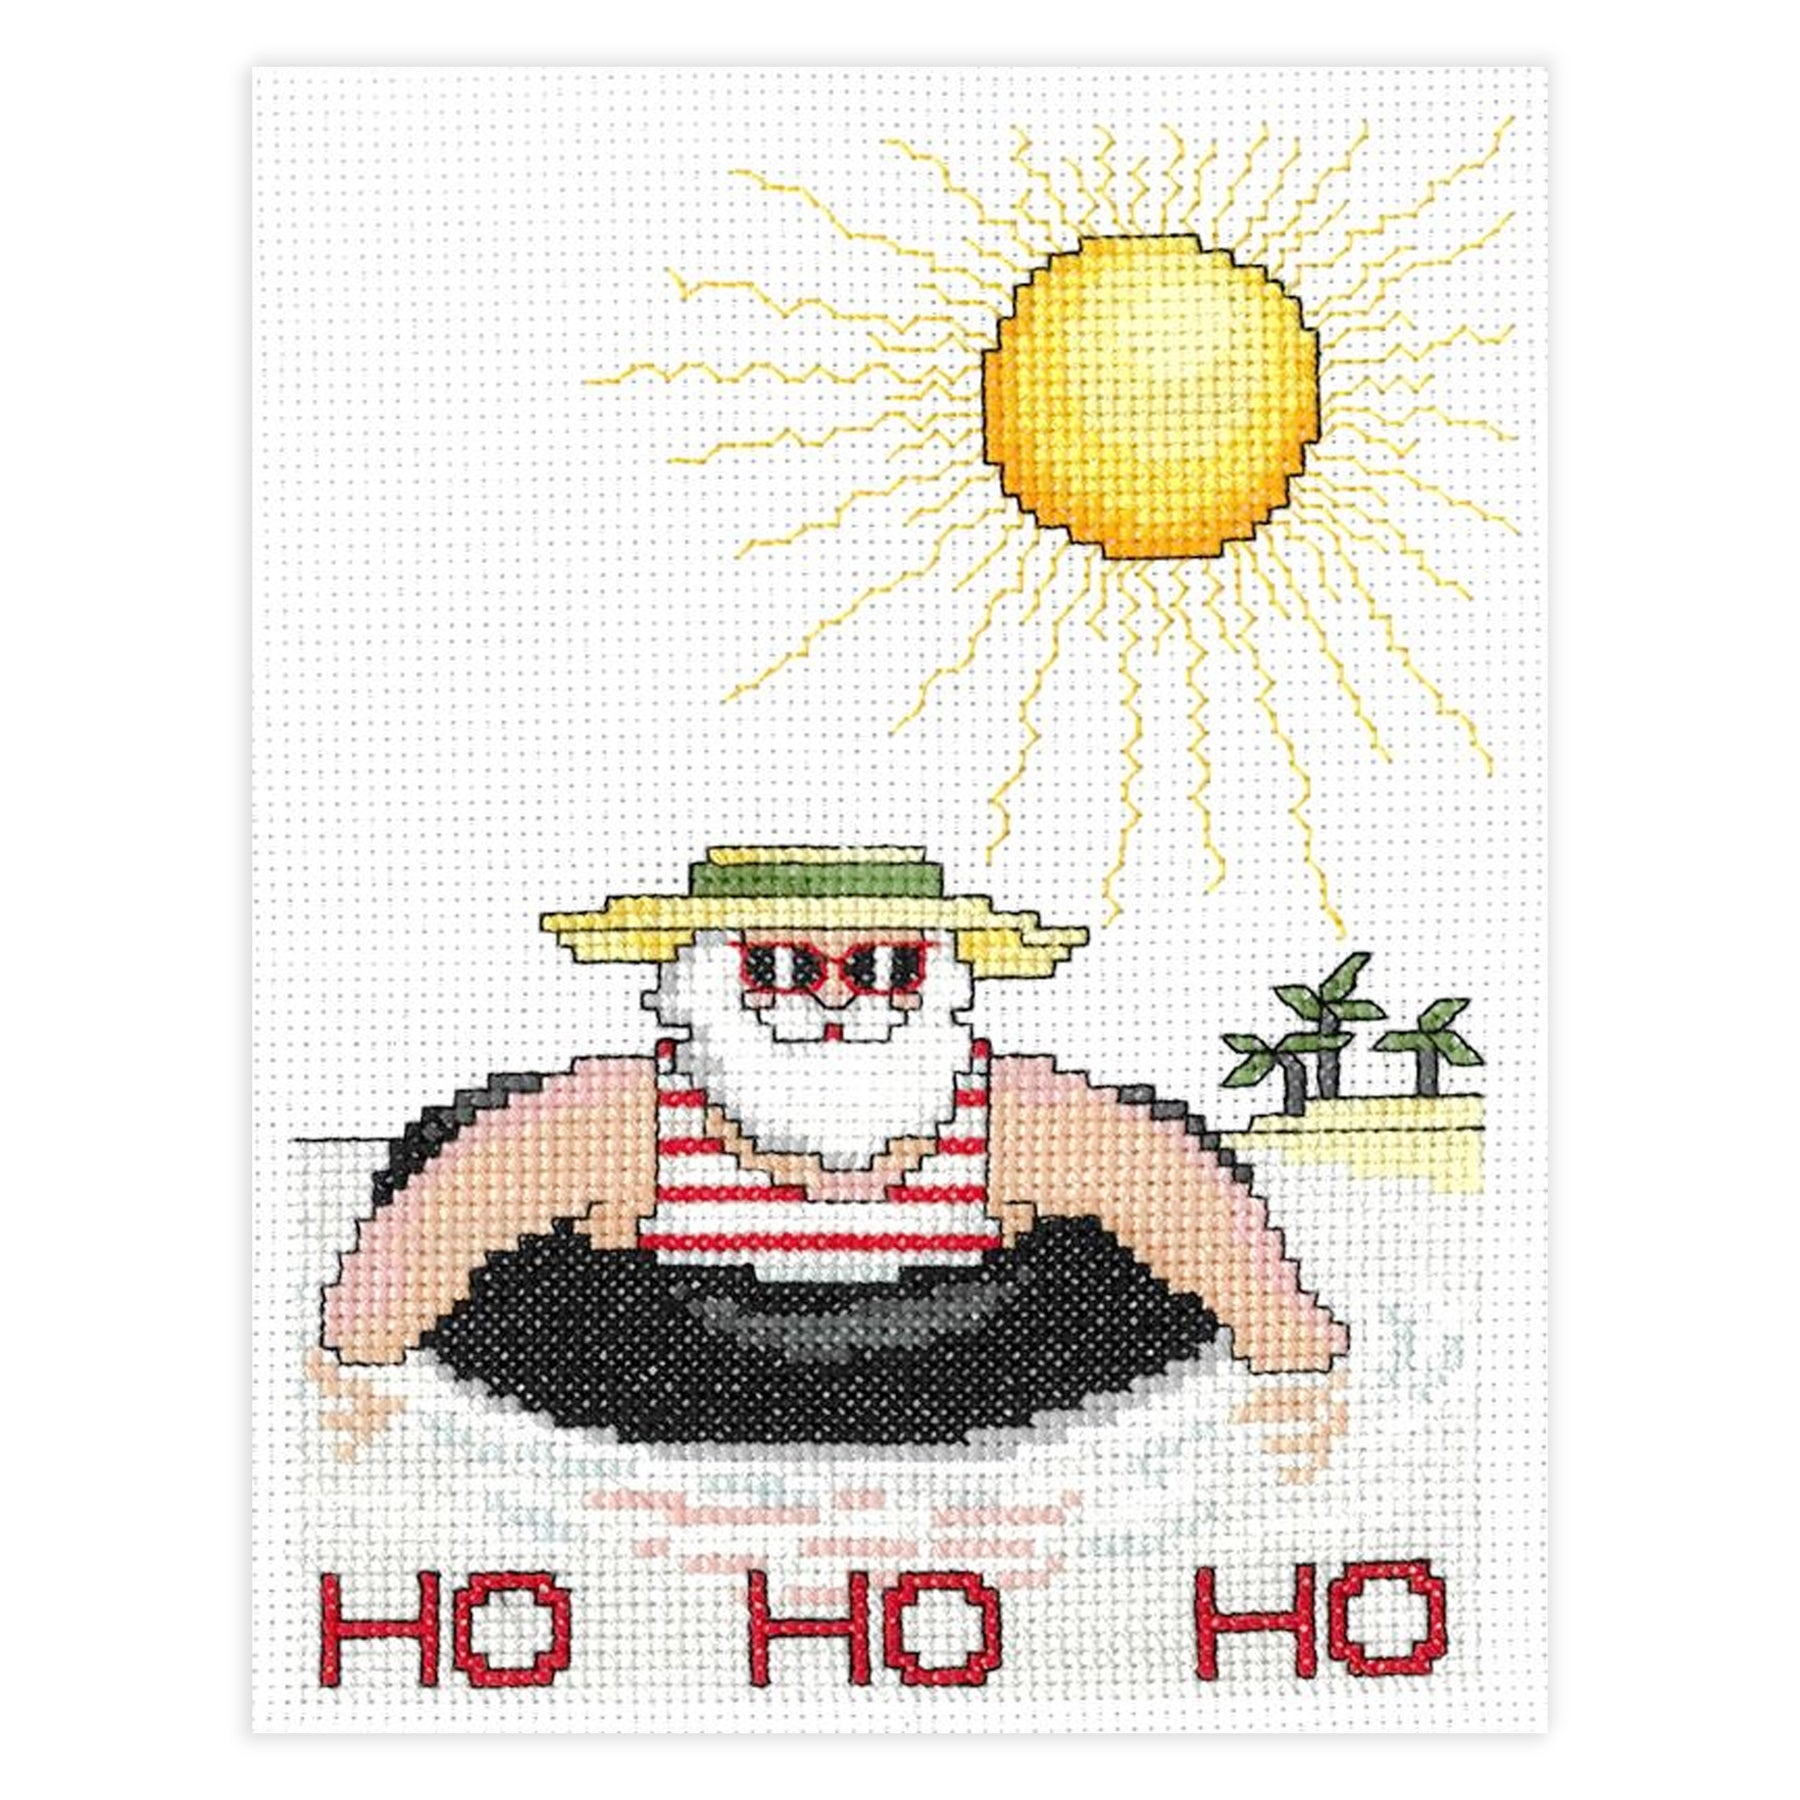 Sunburned Santa Counted Cross Stitch Leaflet